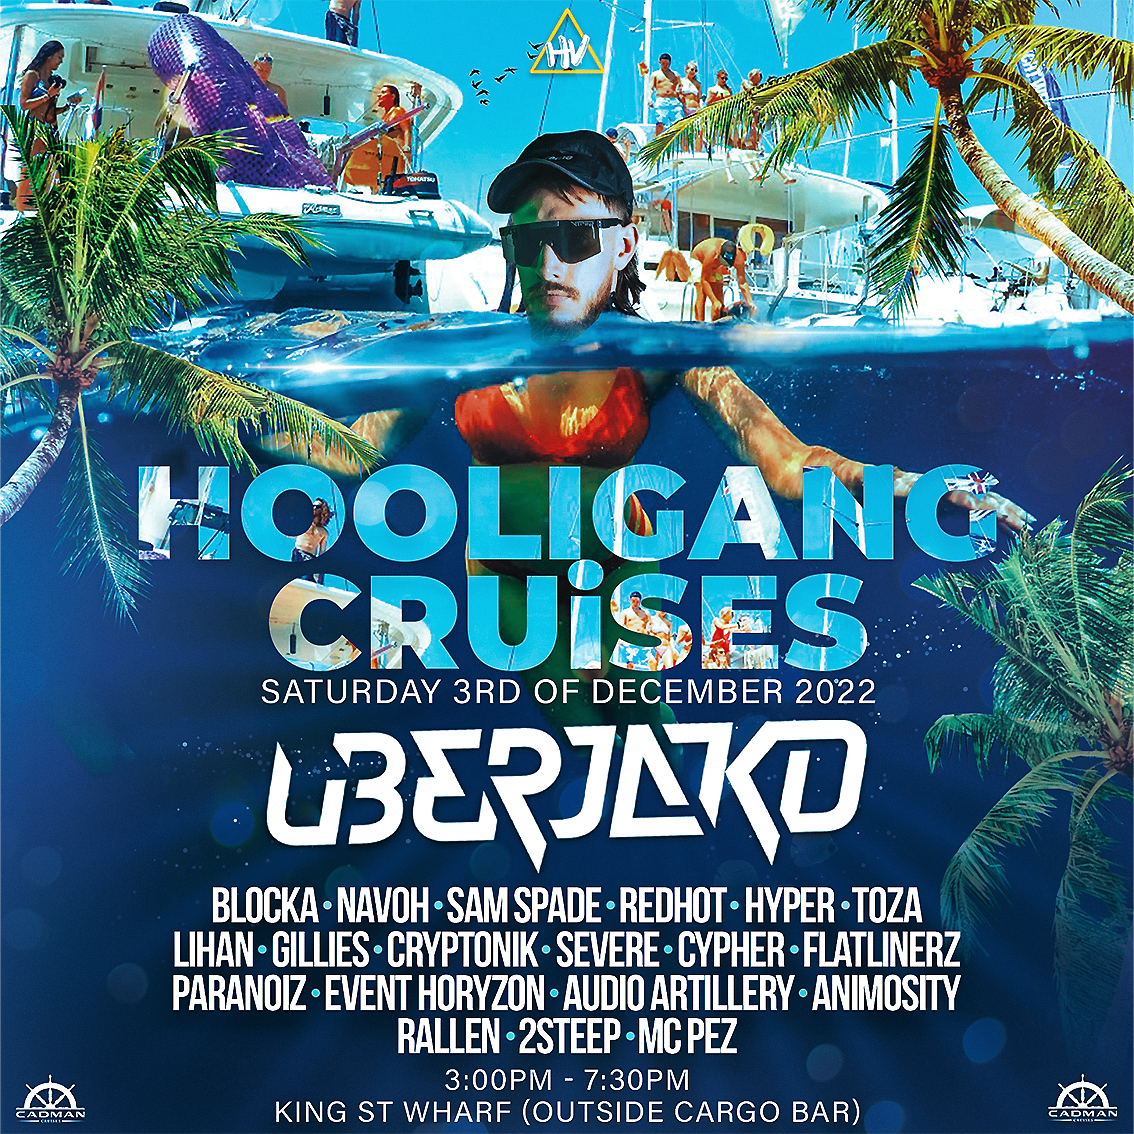 Hooligang Cruises feat UBERJAKD